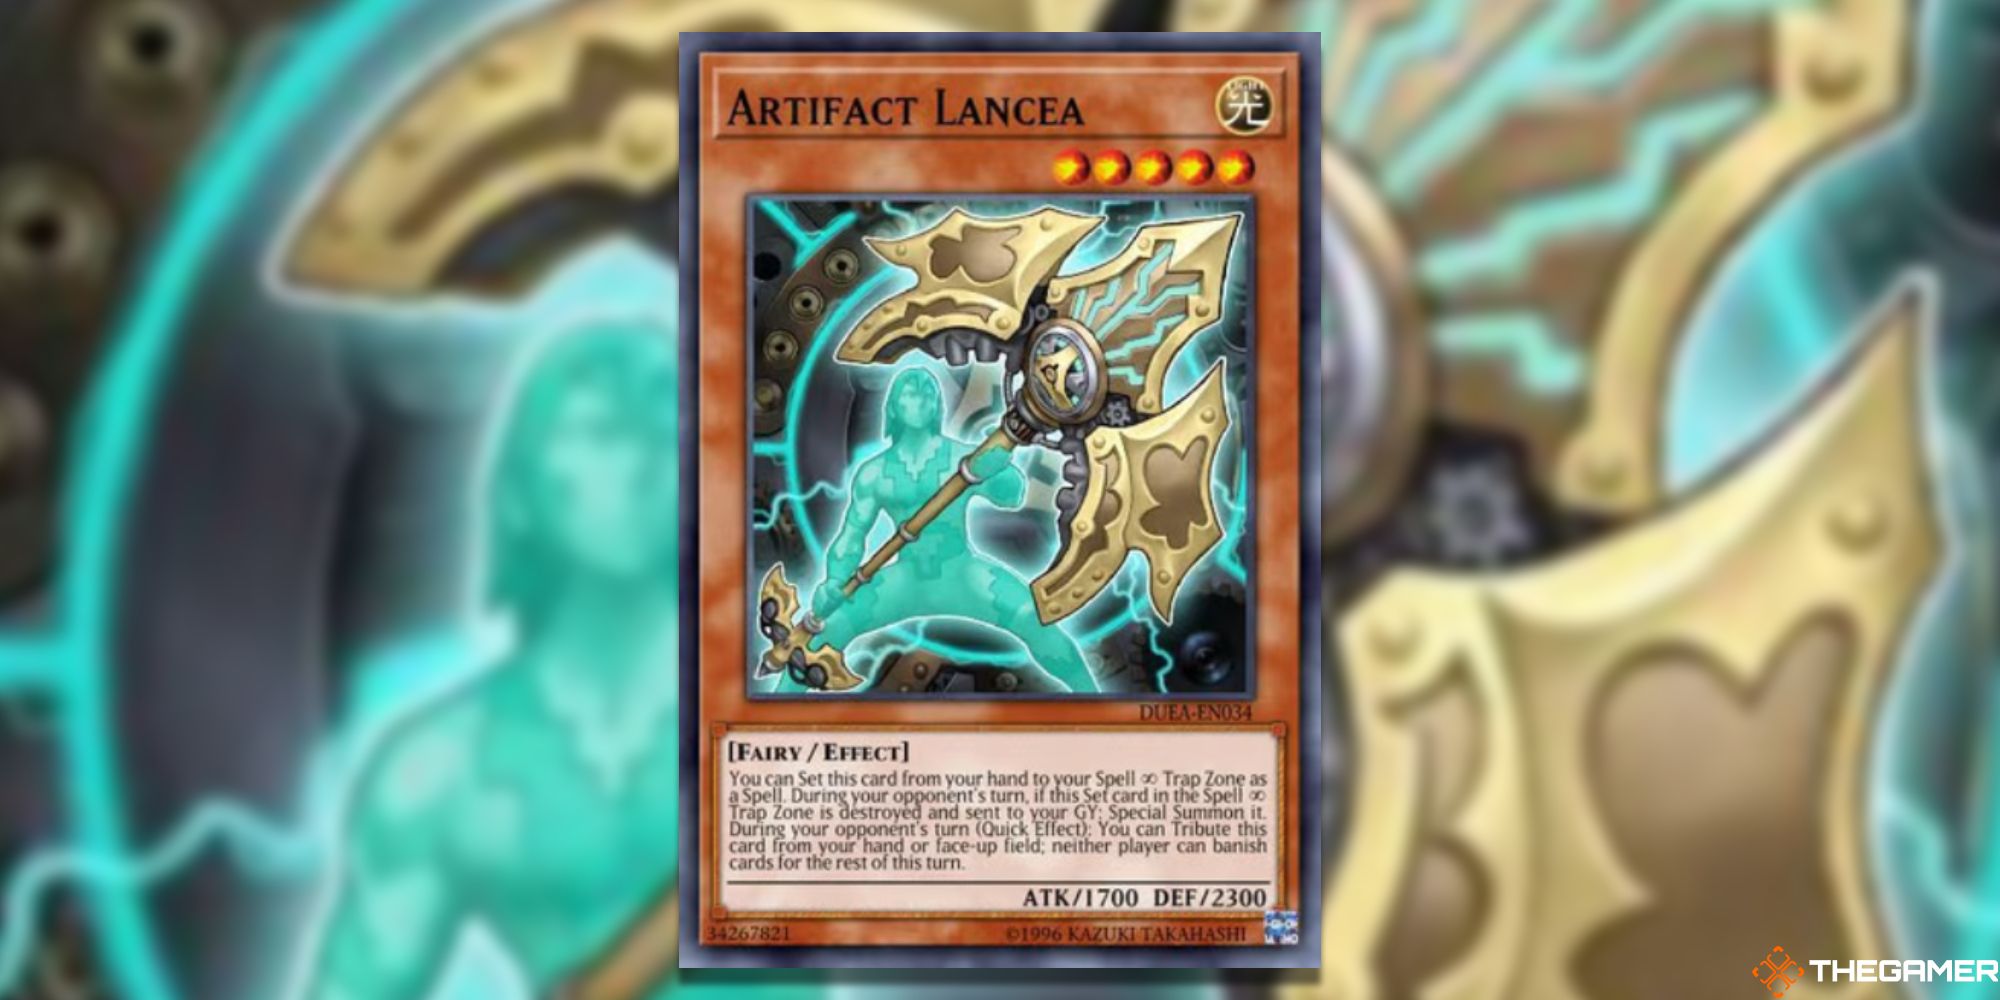 Yu-Gi-Oh! Artifact Lancea on blurred background